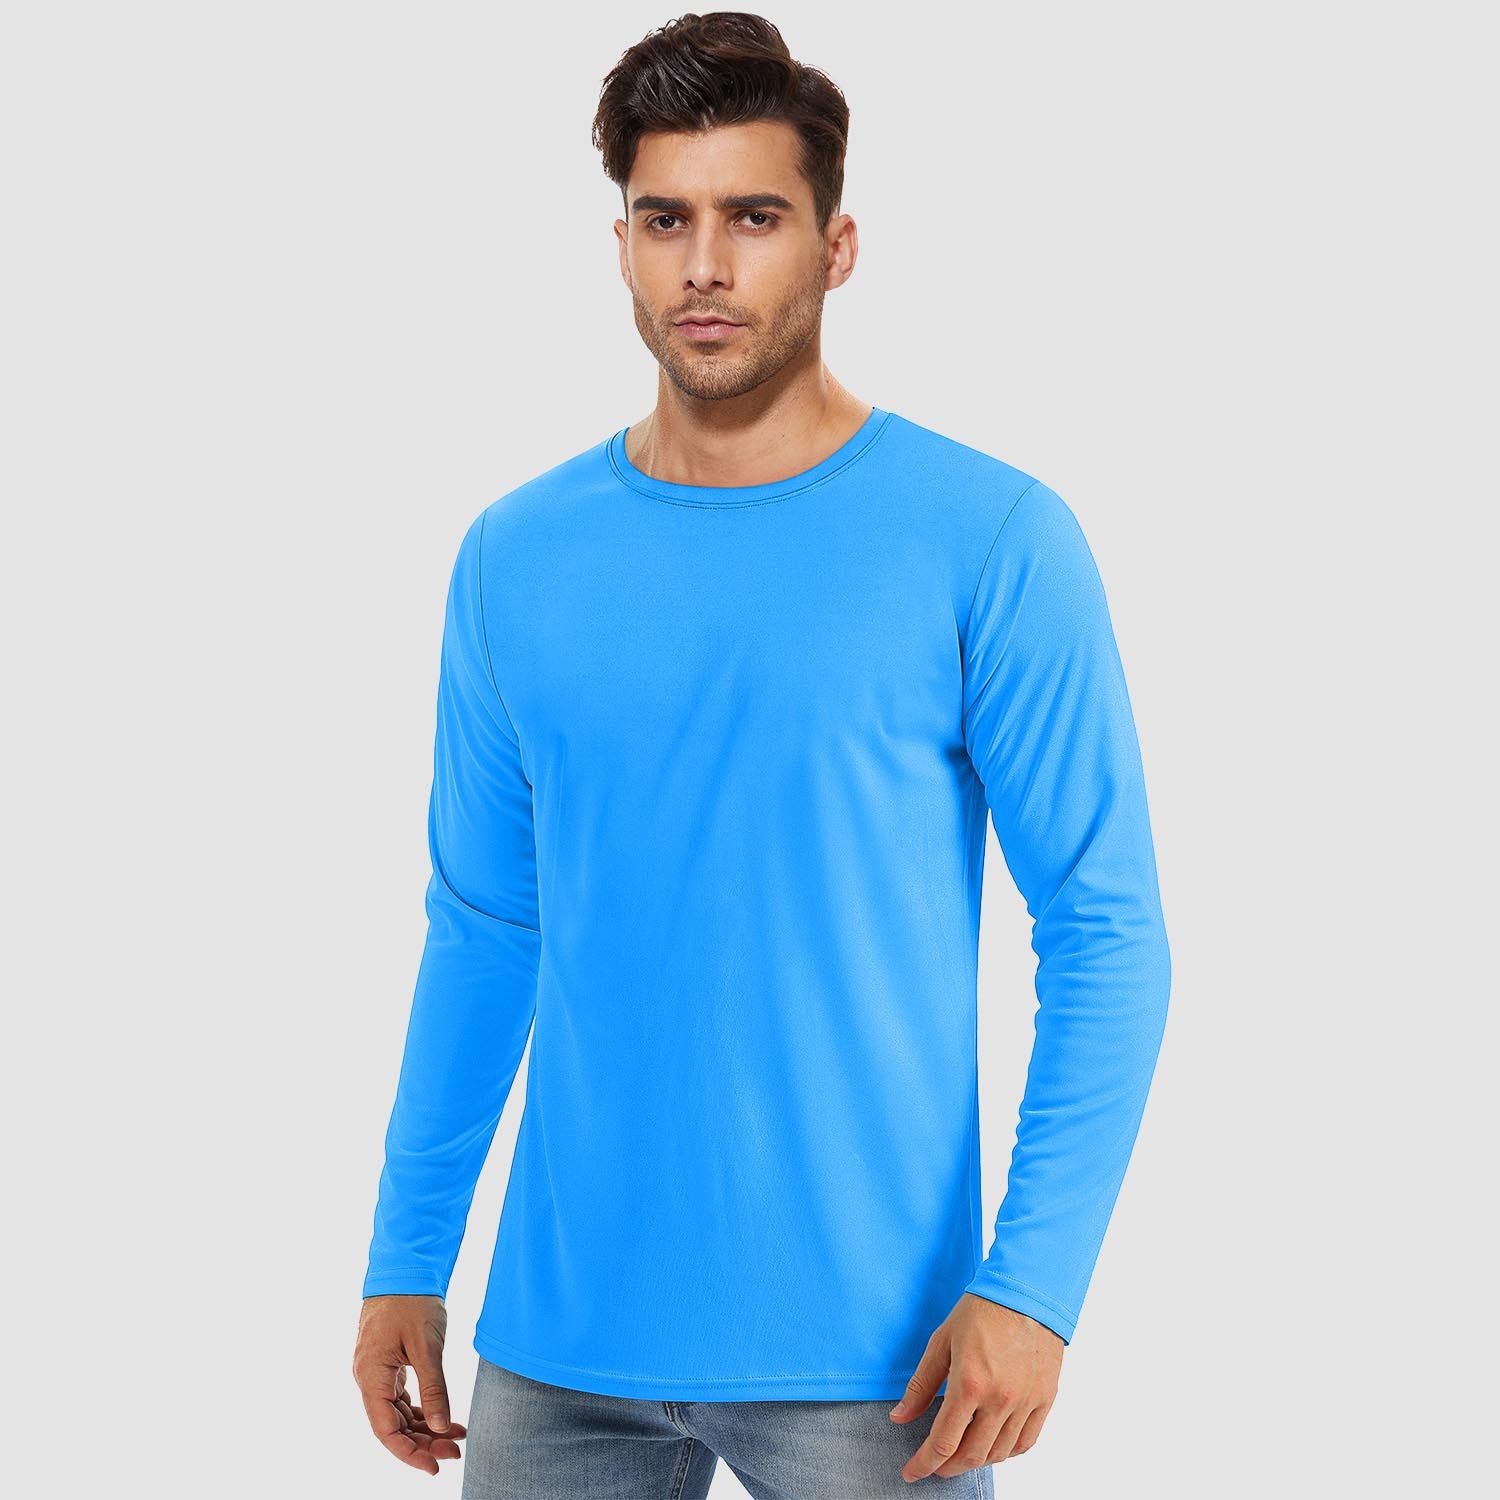 Men's UPF 80+ Long Sleeve Shirts UV Sun Protection Shirt Running Fishing Quick Dry Rash Guard Shirts